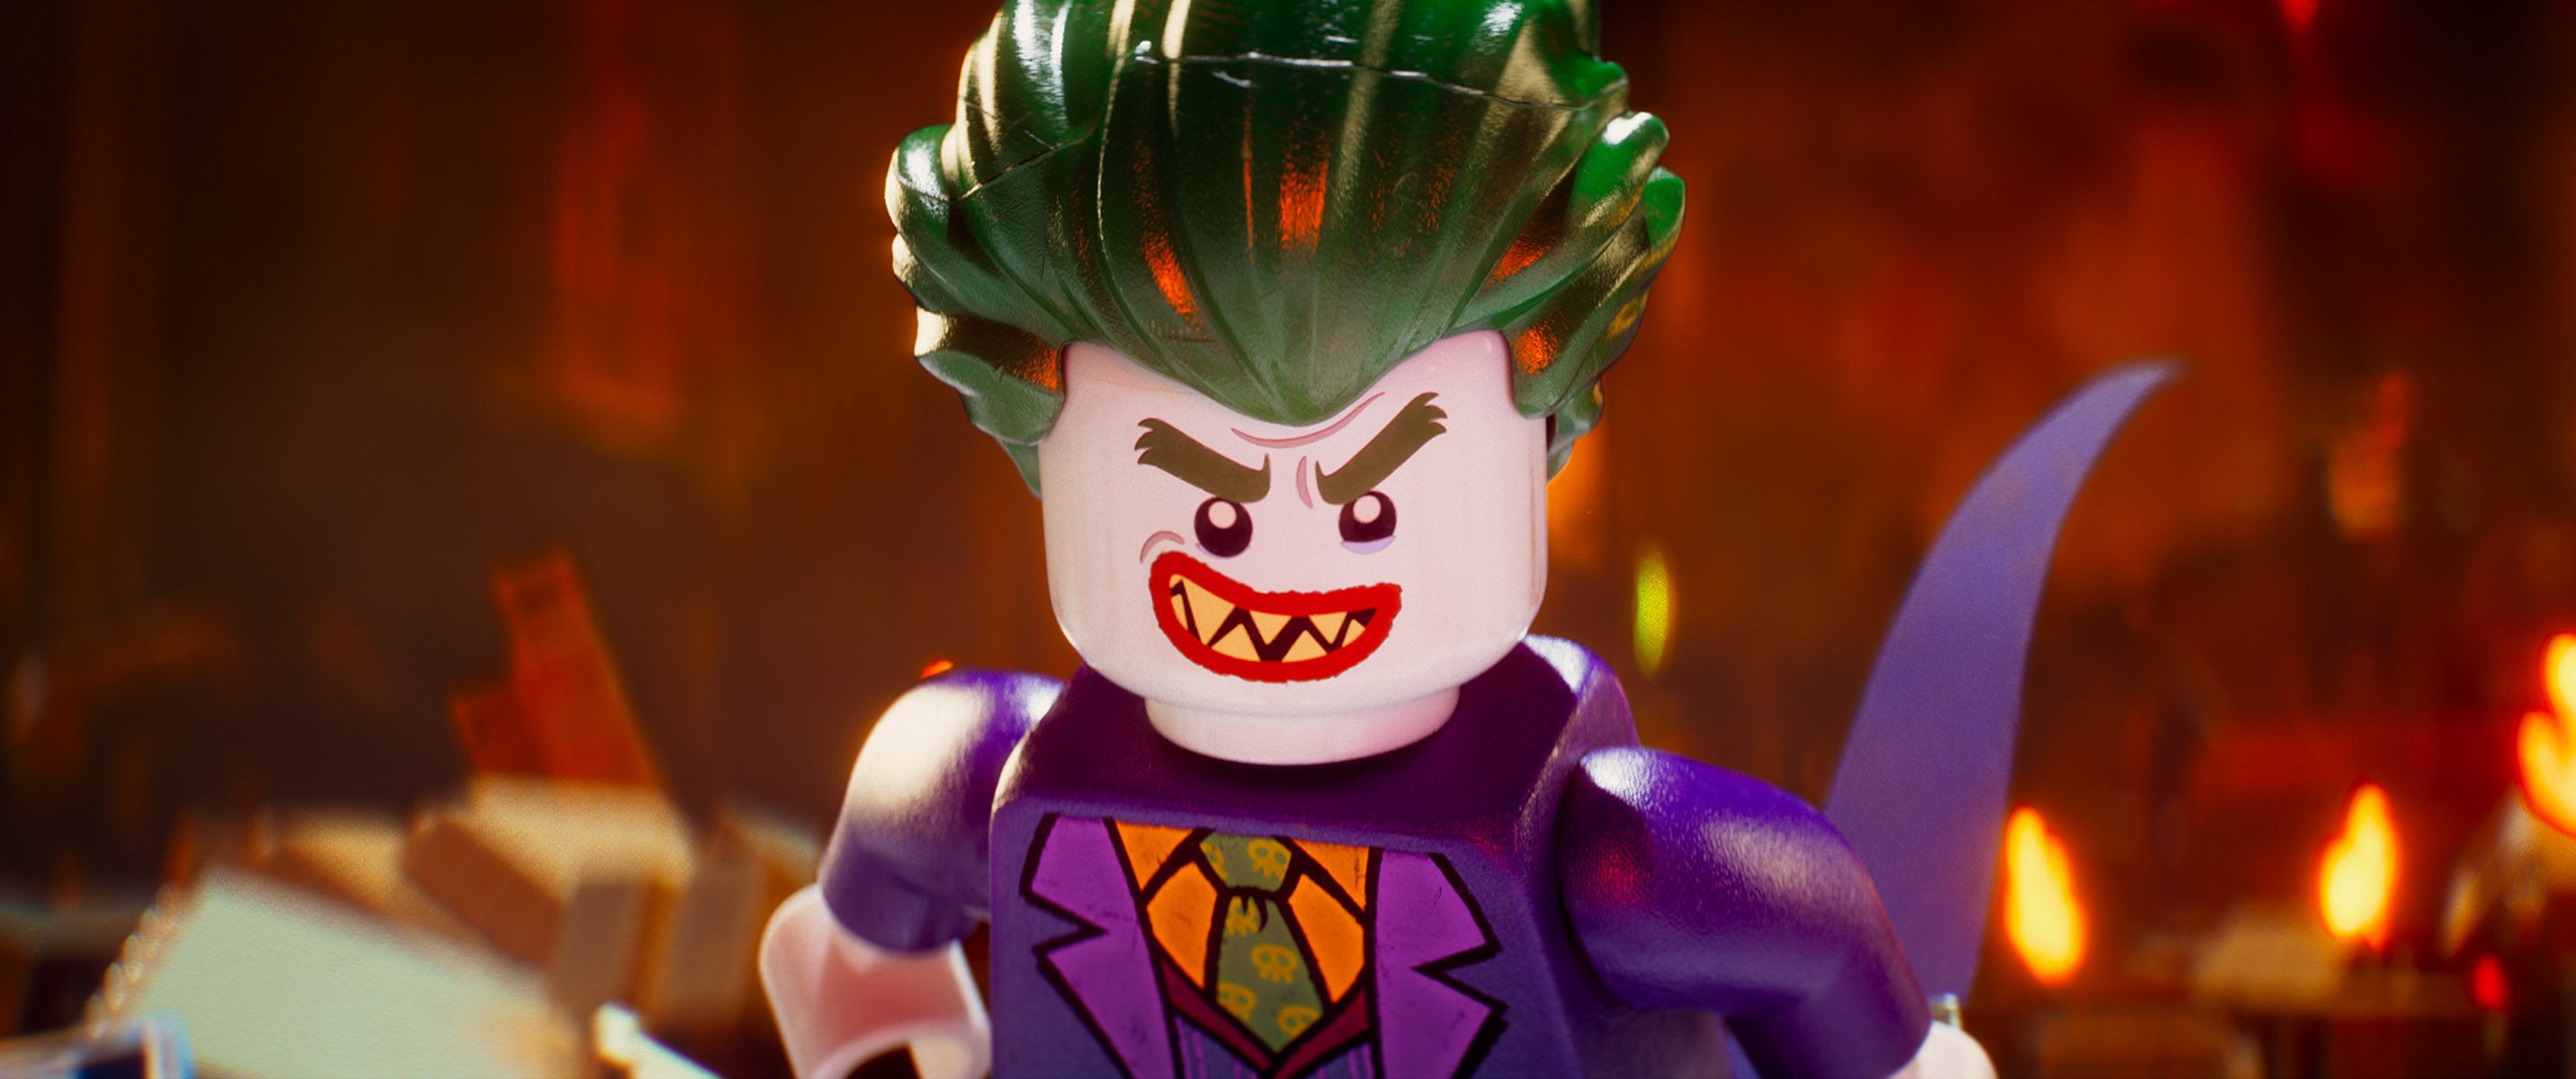 The Lego Batman Movie The Joker Wallpaper Batman Movie Bad